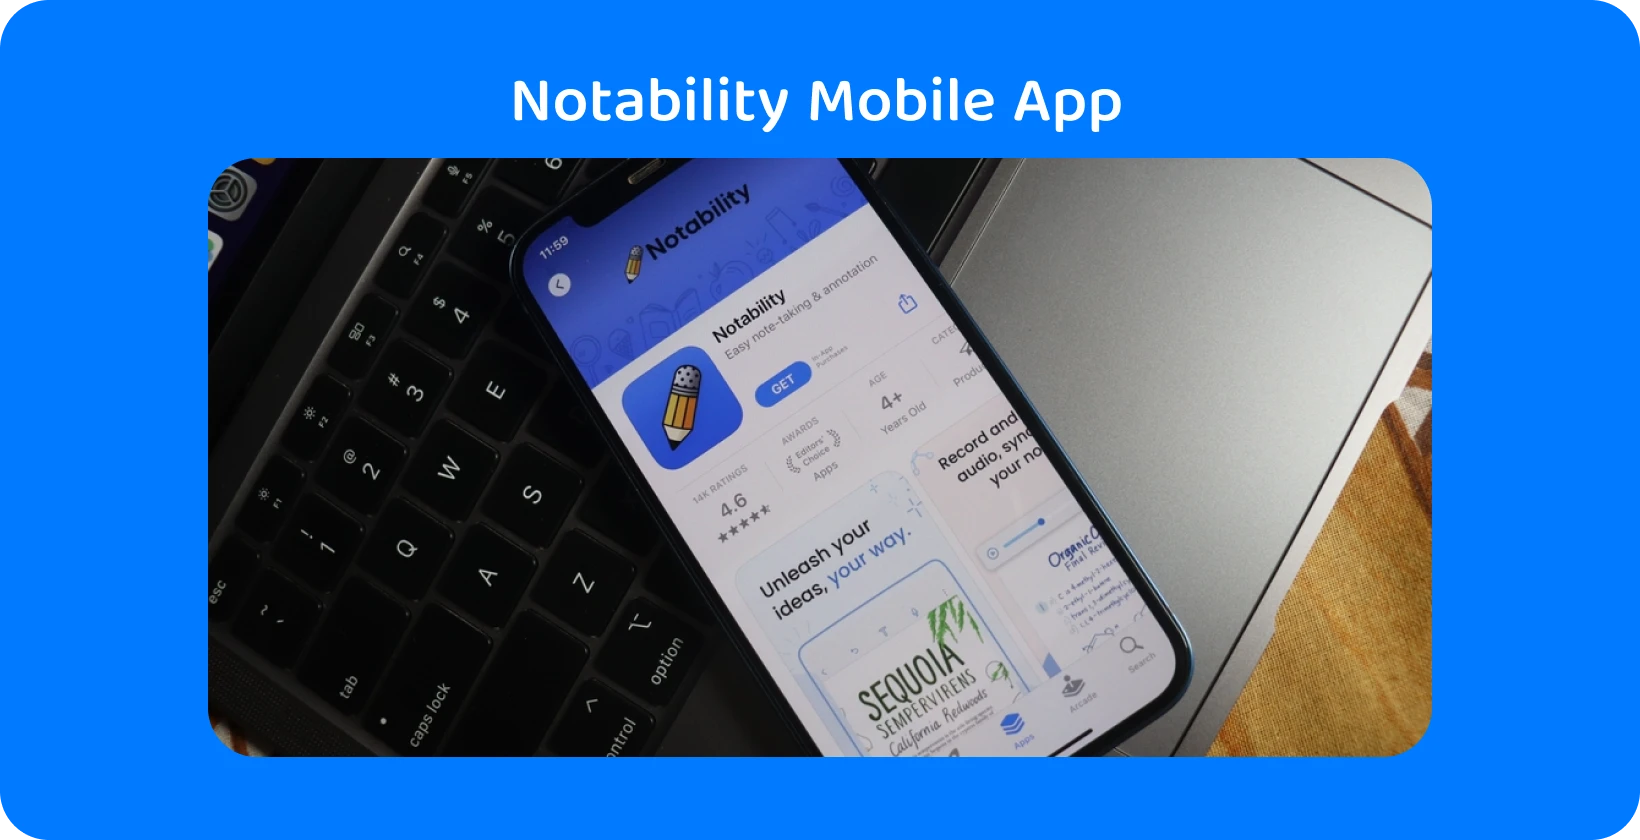 Notability εφαρμογή στην οθόνη του smartphone με δυνατότητα μεταγραφής, παρουσιάζοντας δυνατότητες ήχου σε κείμενο.